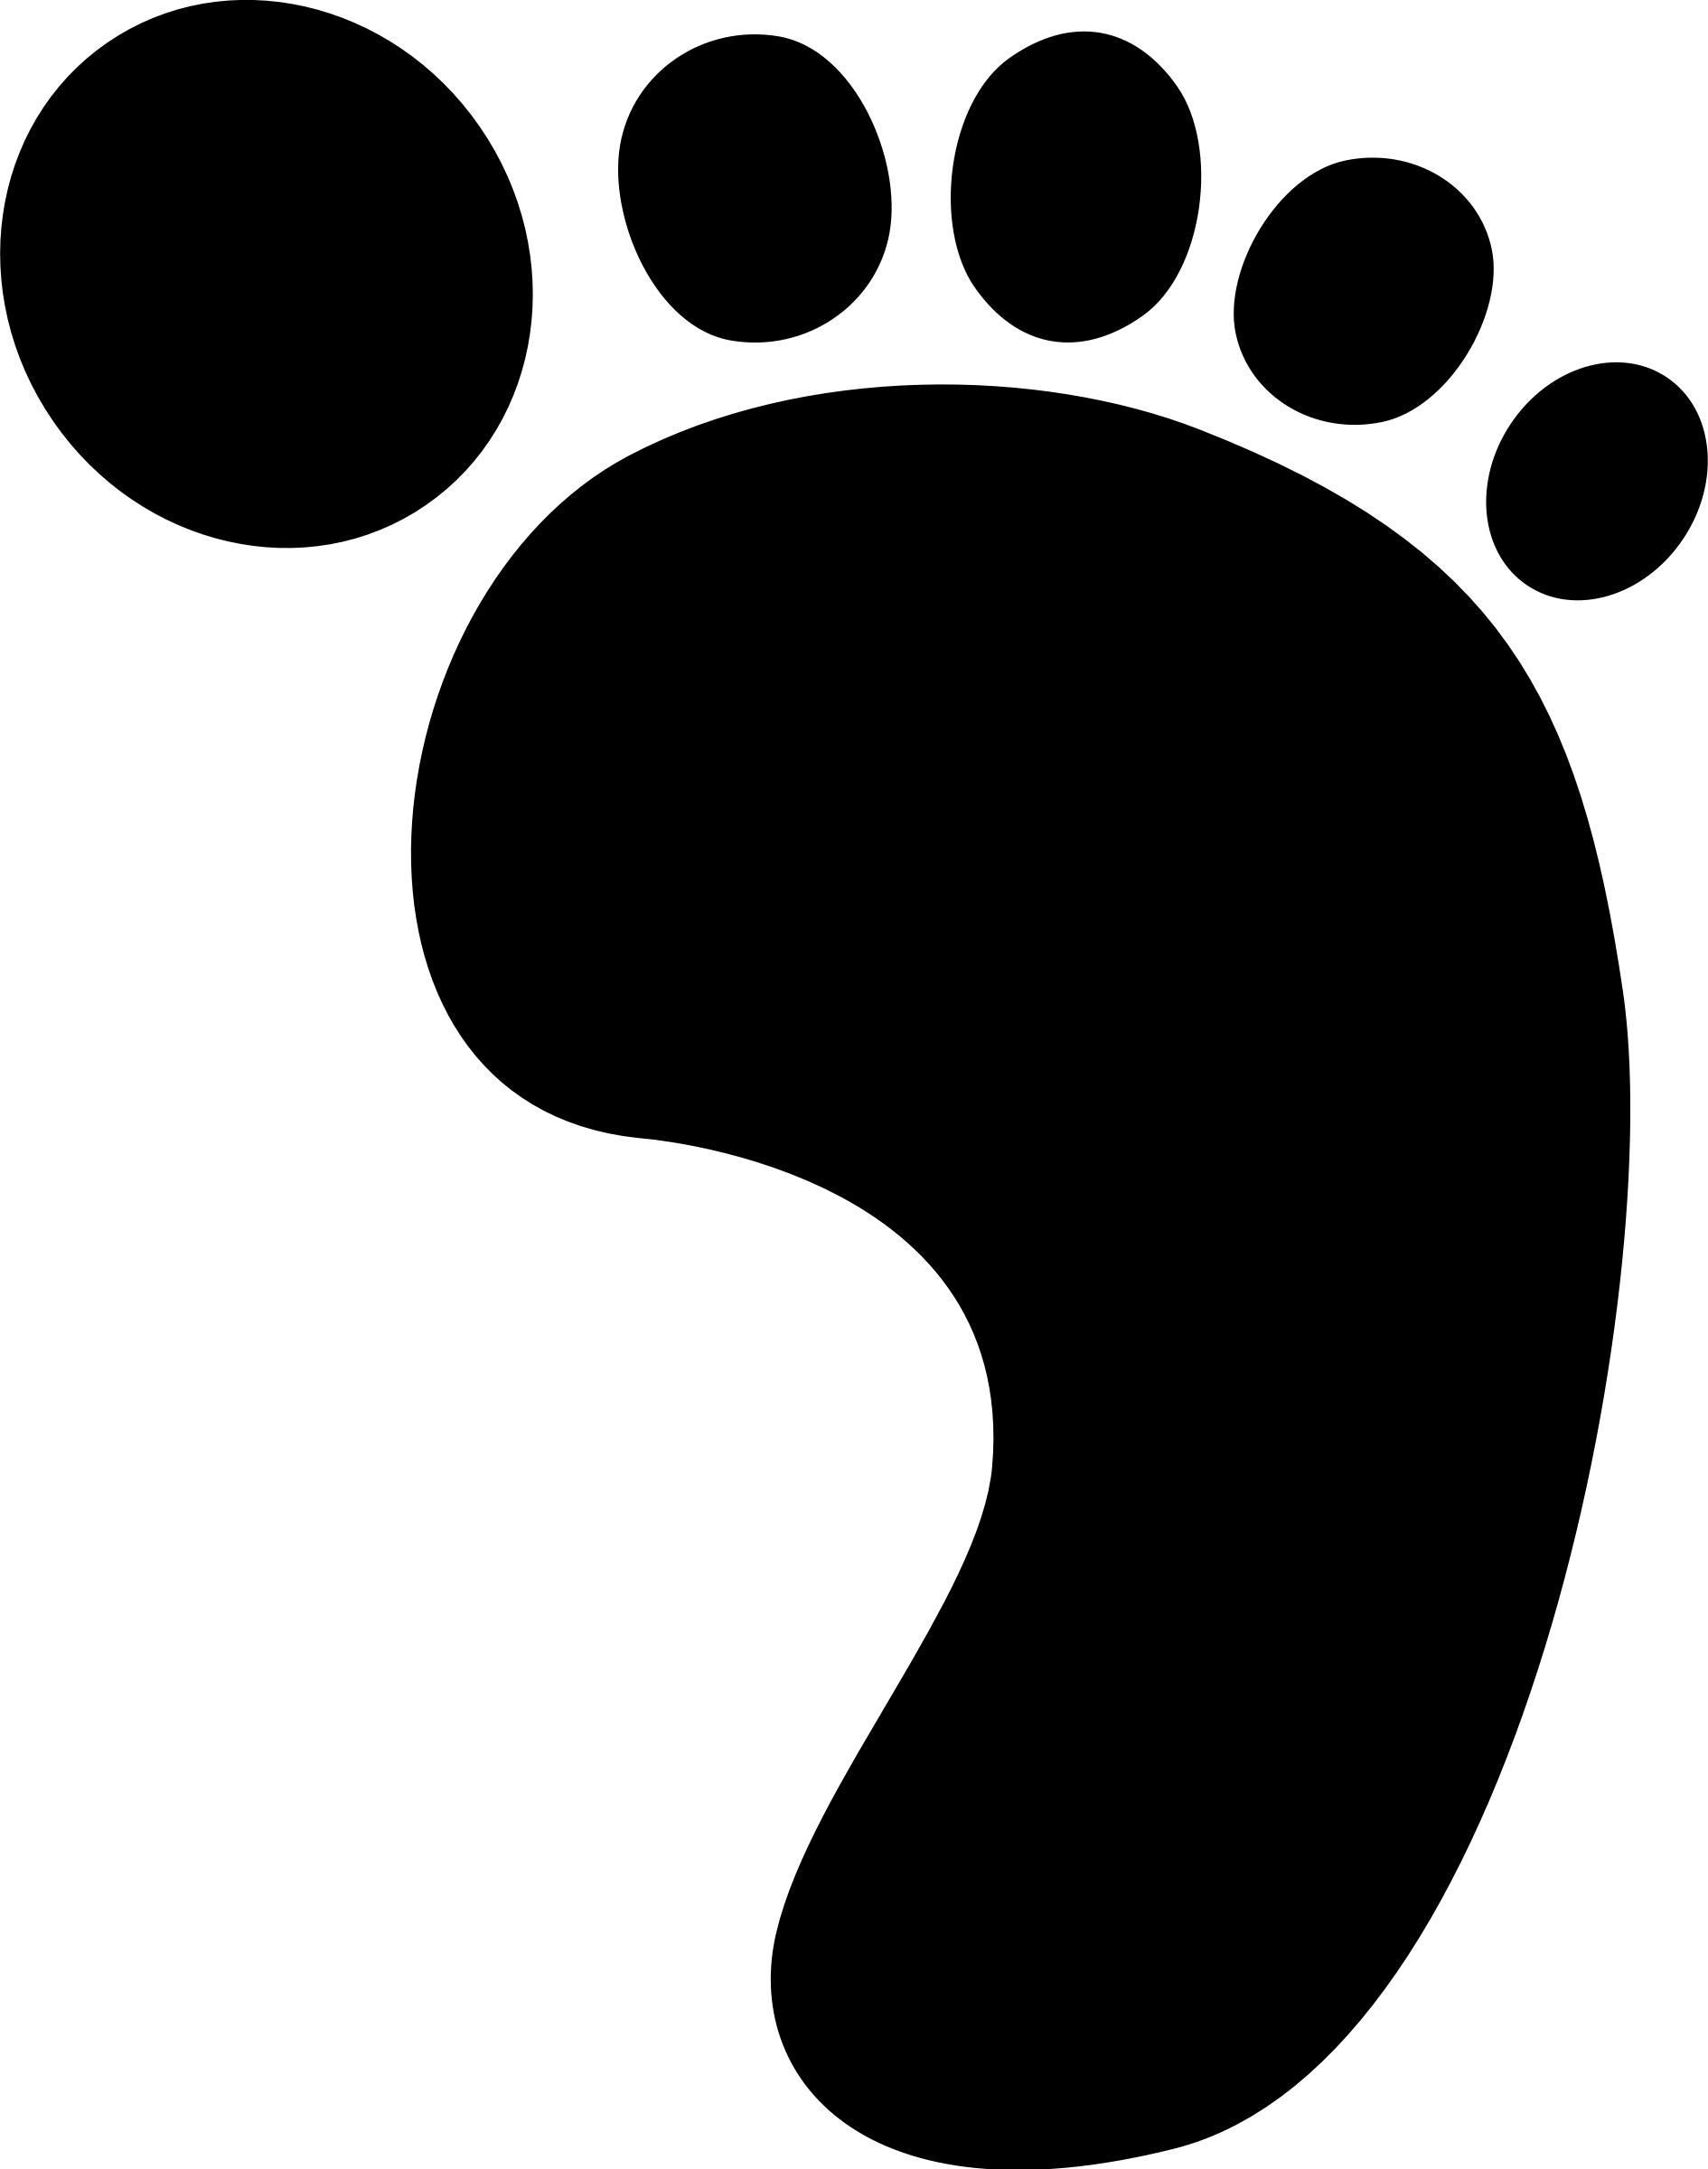 File:2 parallel footprints.pn